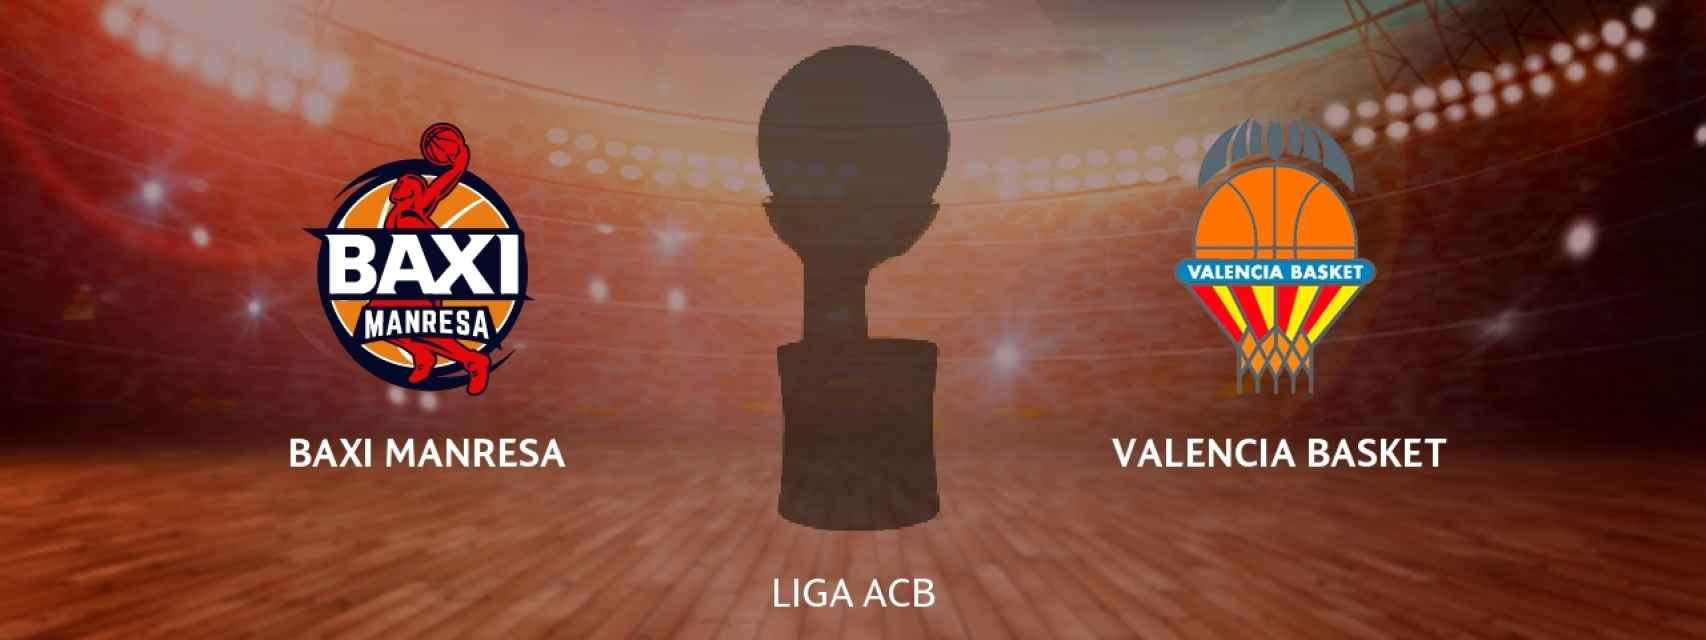 Baxi Manresa - Valencia Basket